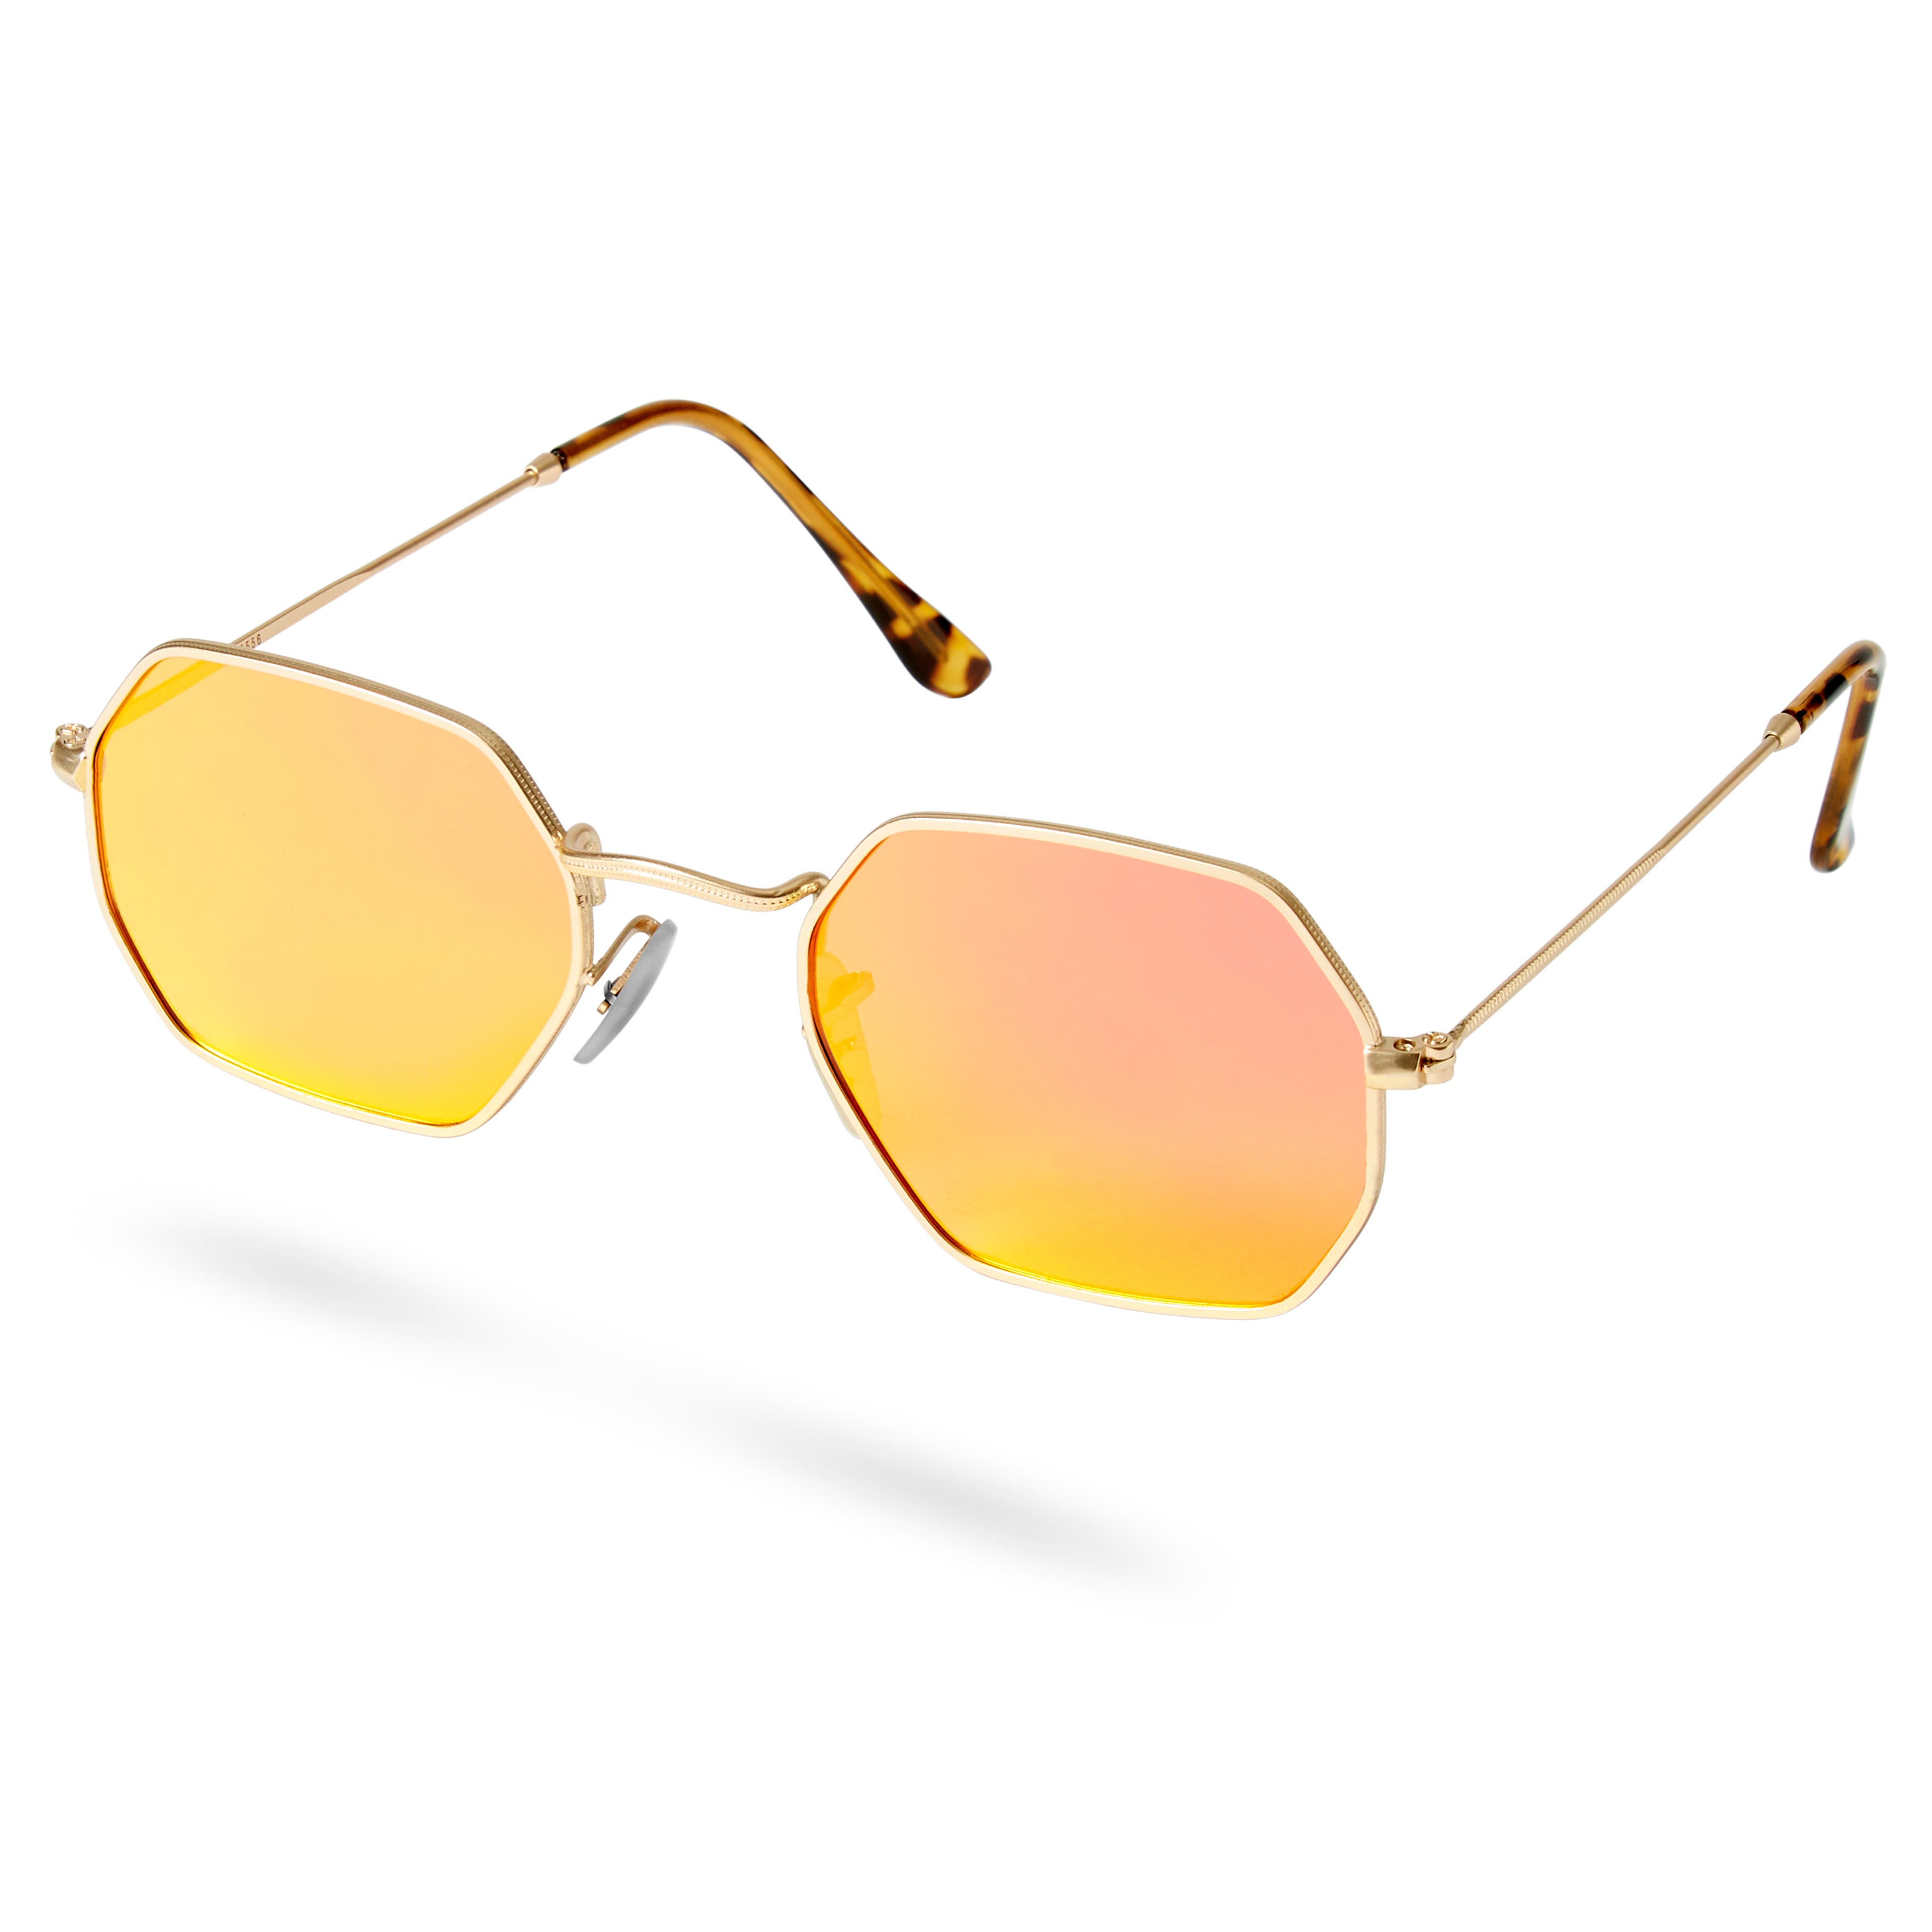 Groovy Goldfarbene & Orangefarbene Sonnenbrille